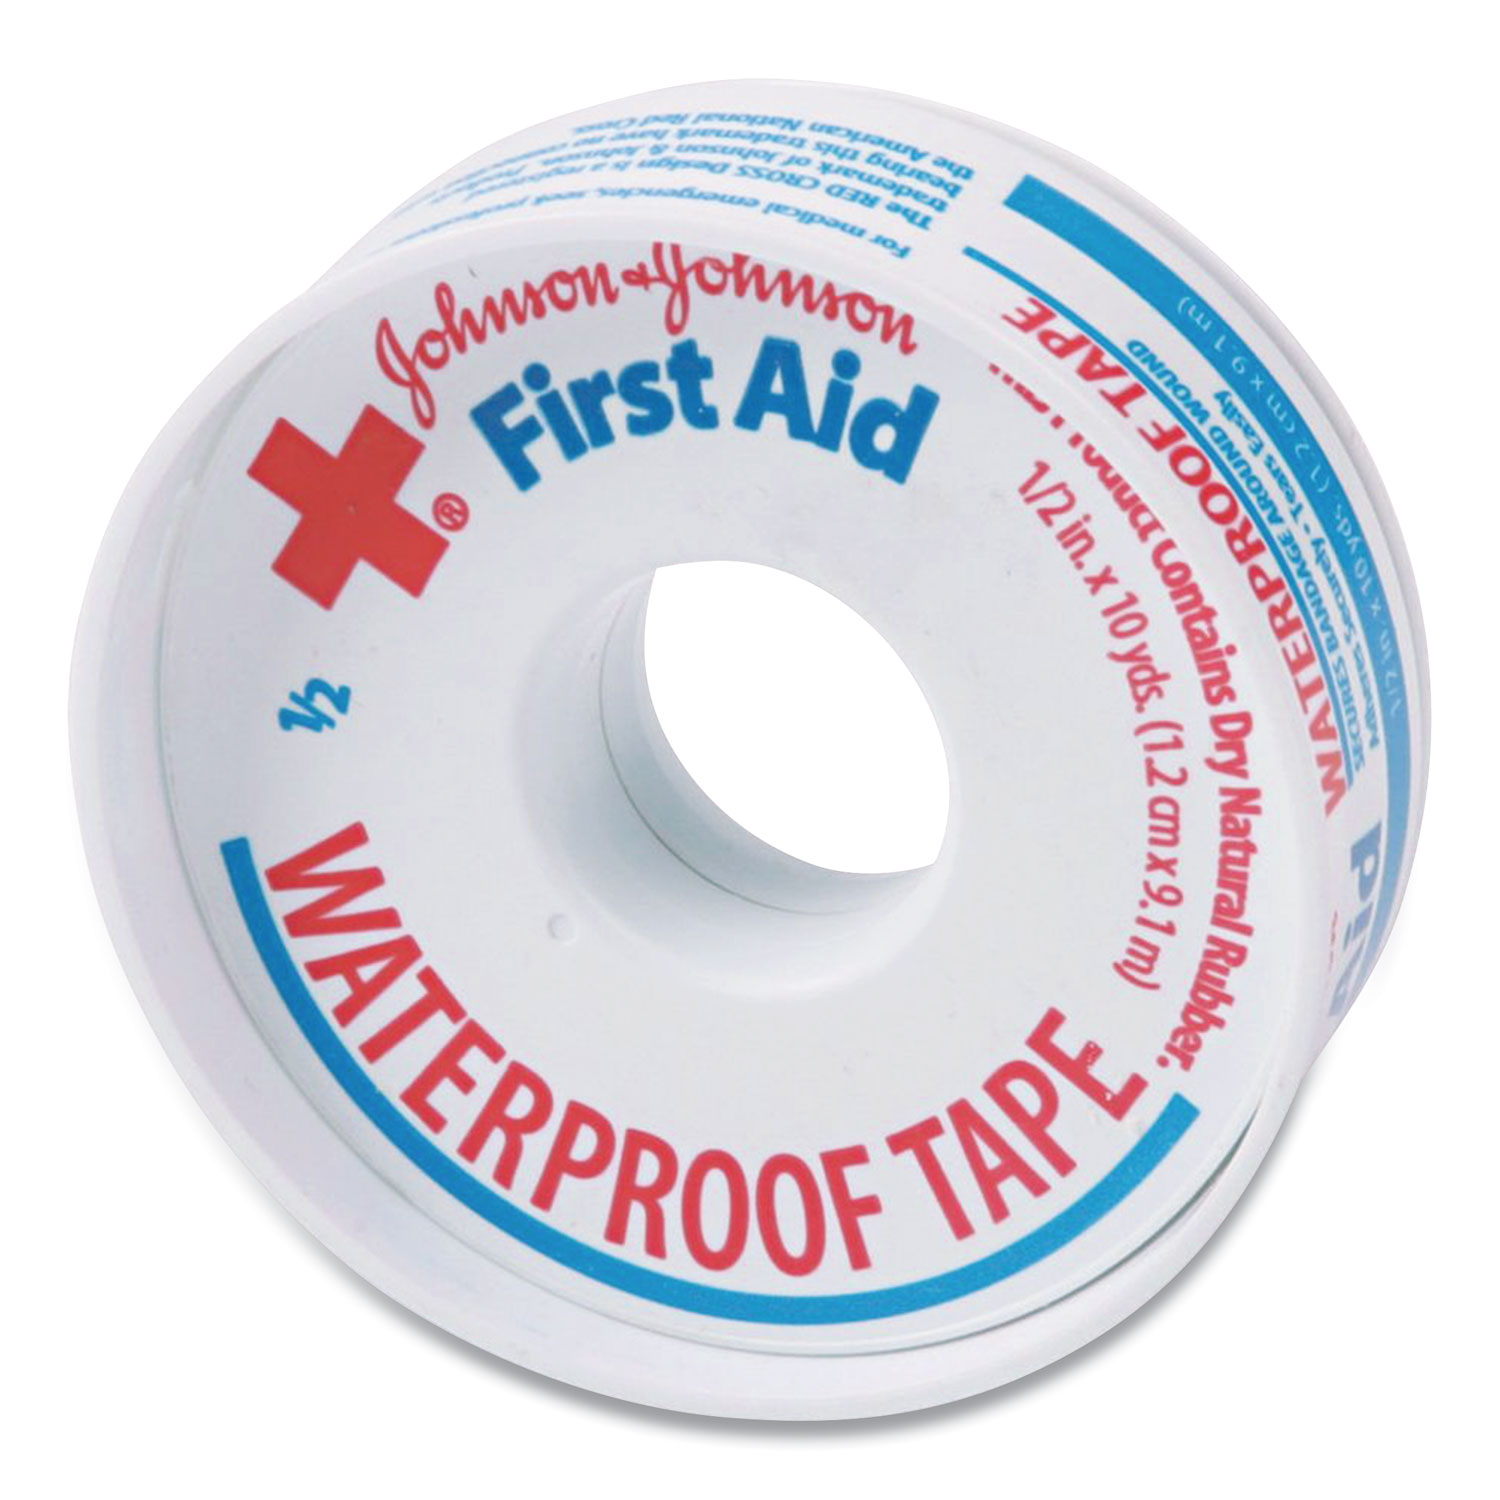 Johnson & Johnson® Waterproof-Adhesive First Aid Tape, 1 Core, 0.5 x 10 yds, White